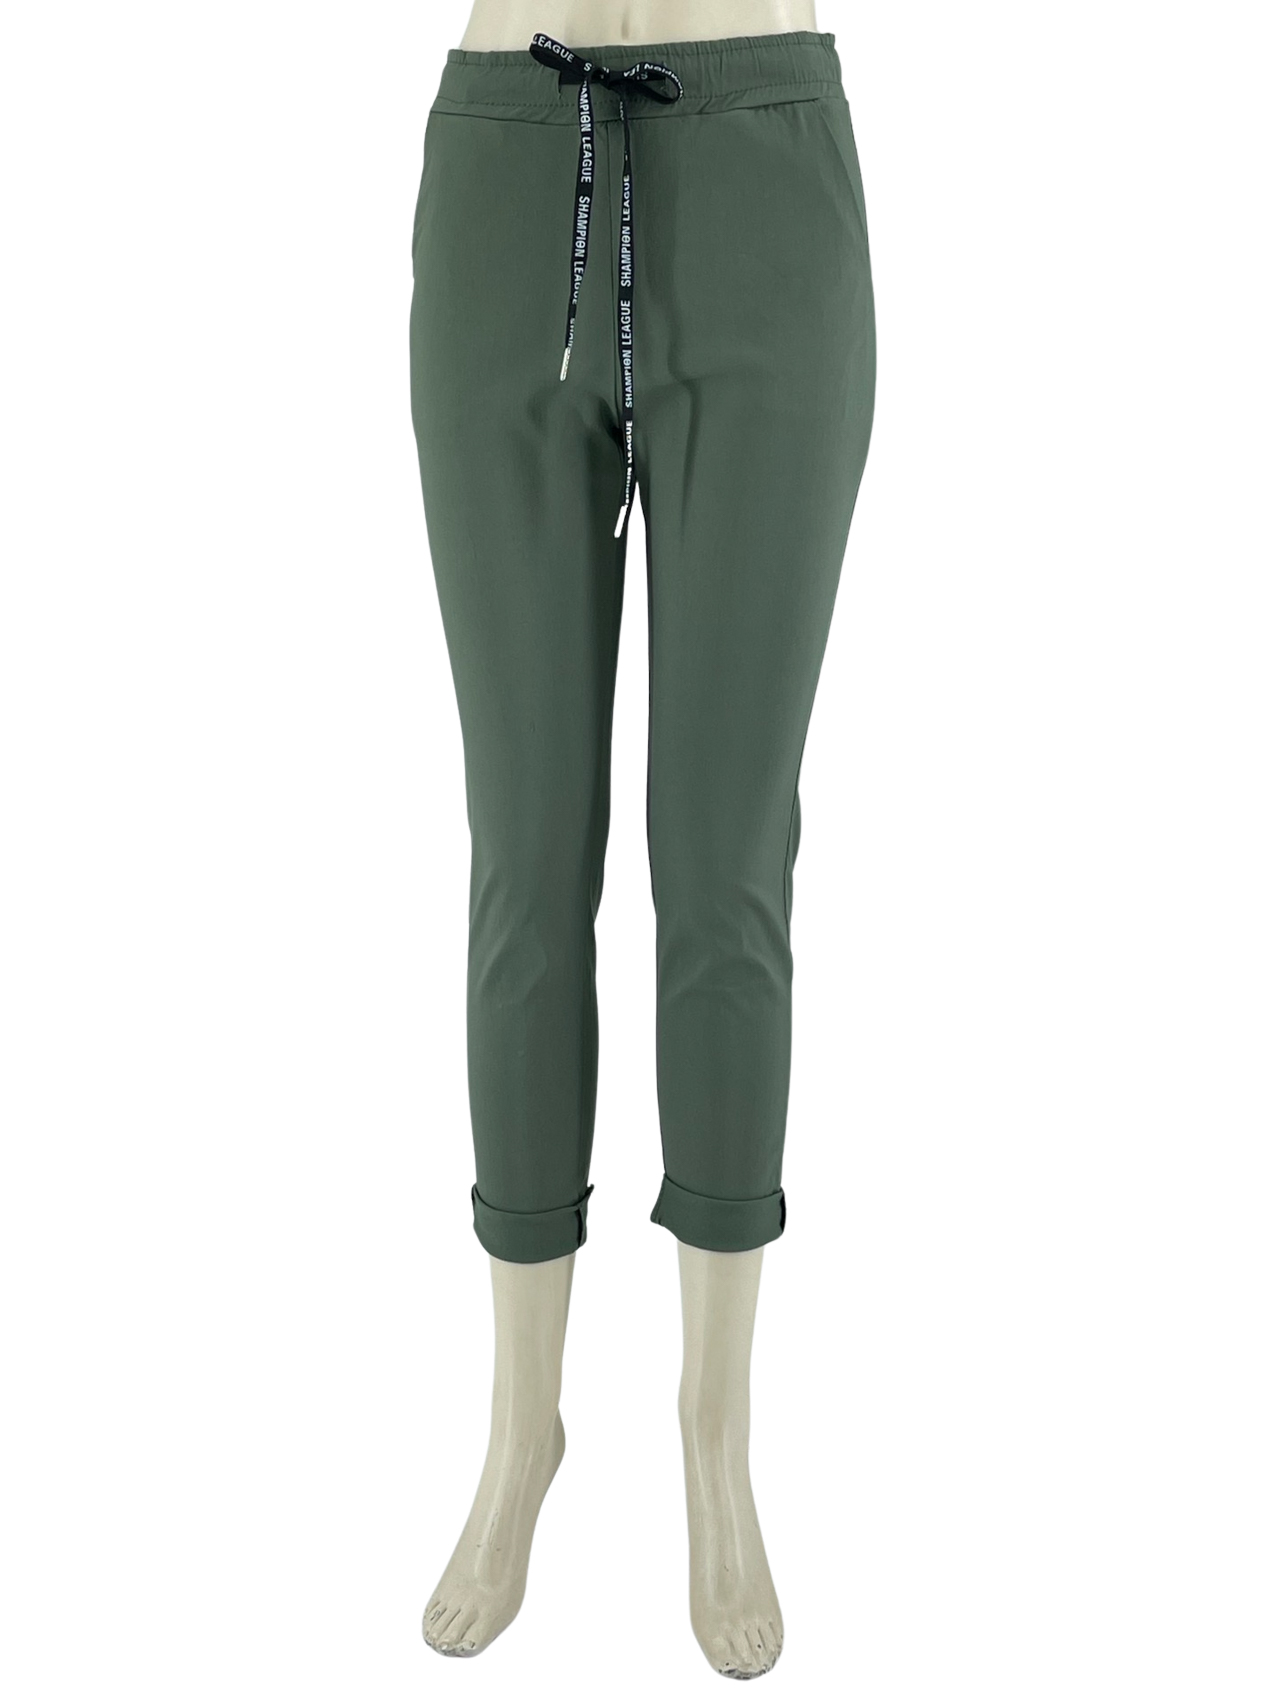 Women's elastic pants with elastic waist code X1871